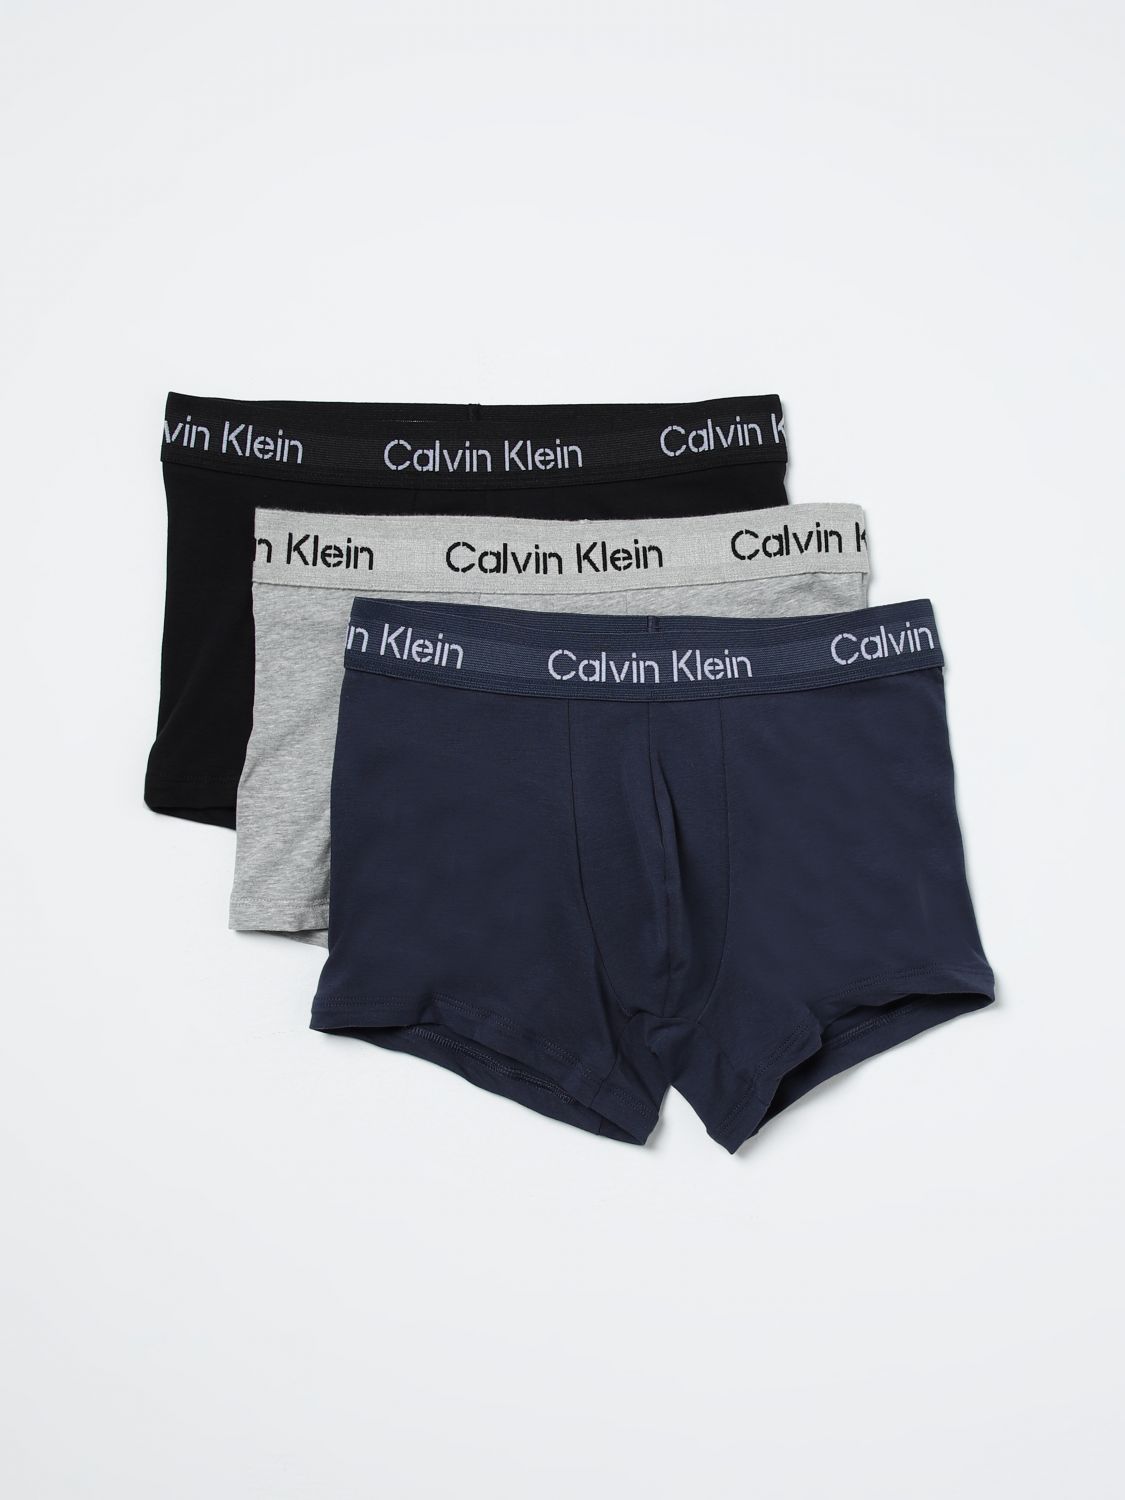 Calvin Klein Underwear CALVIN KLEIN Men color Grey